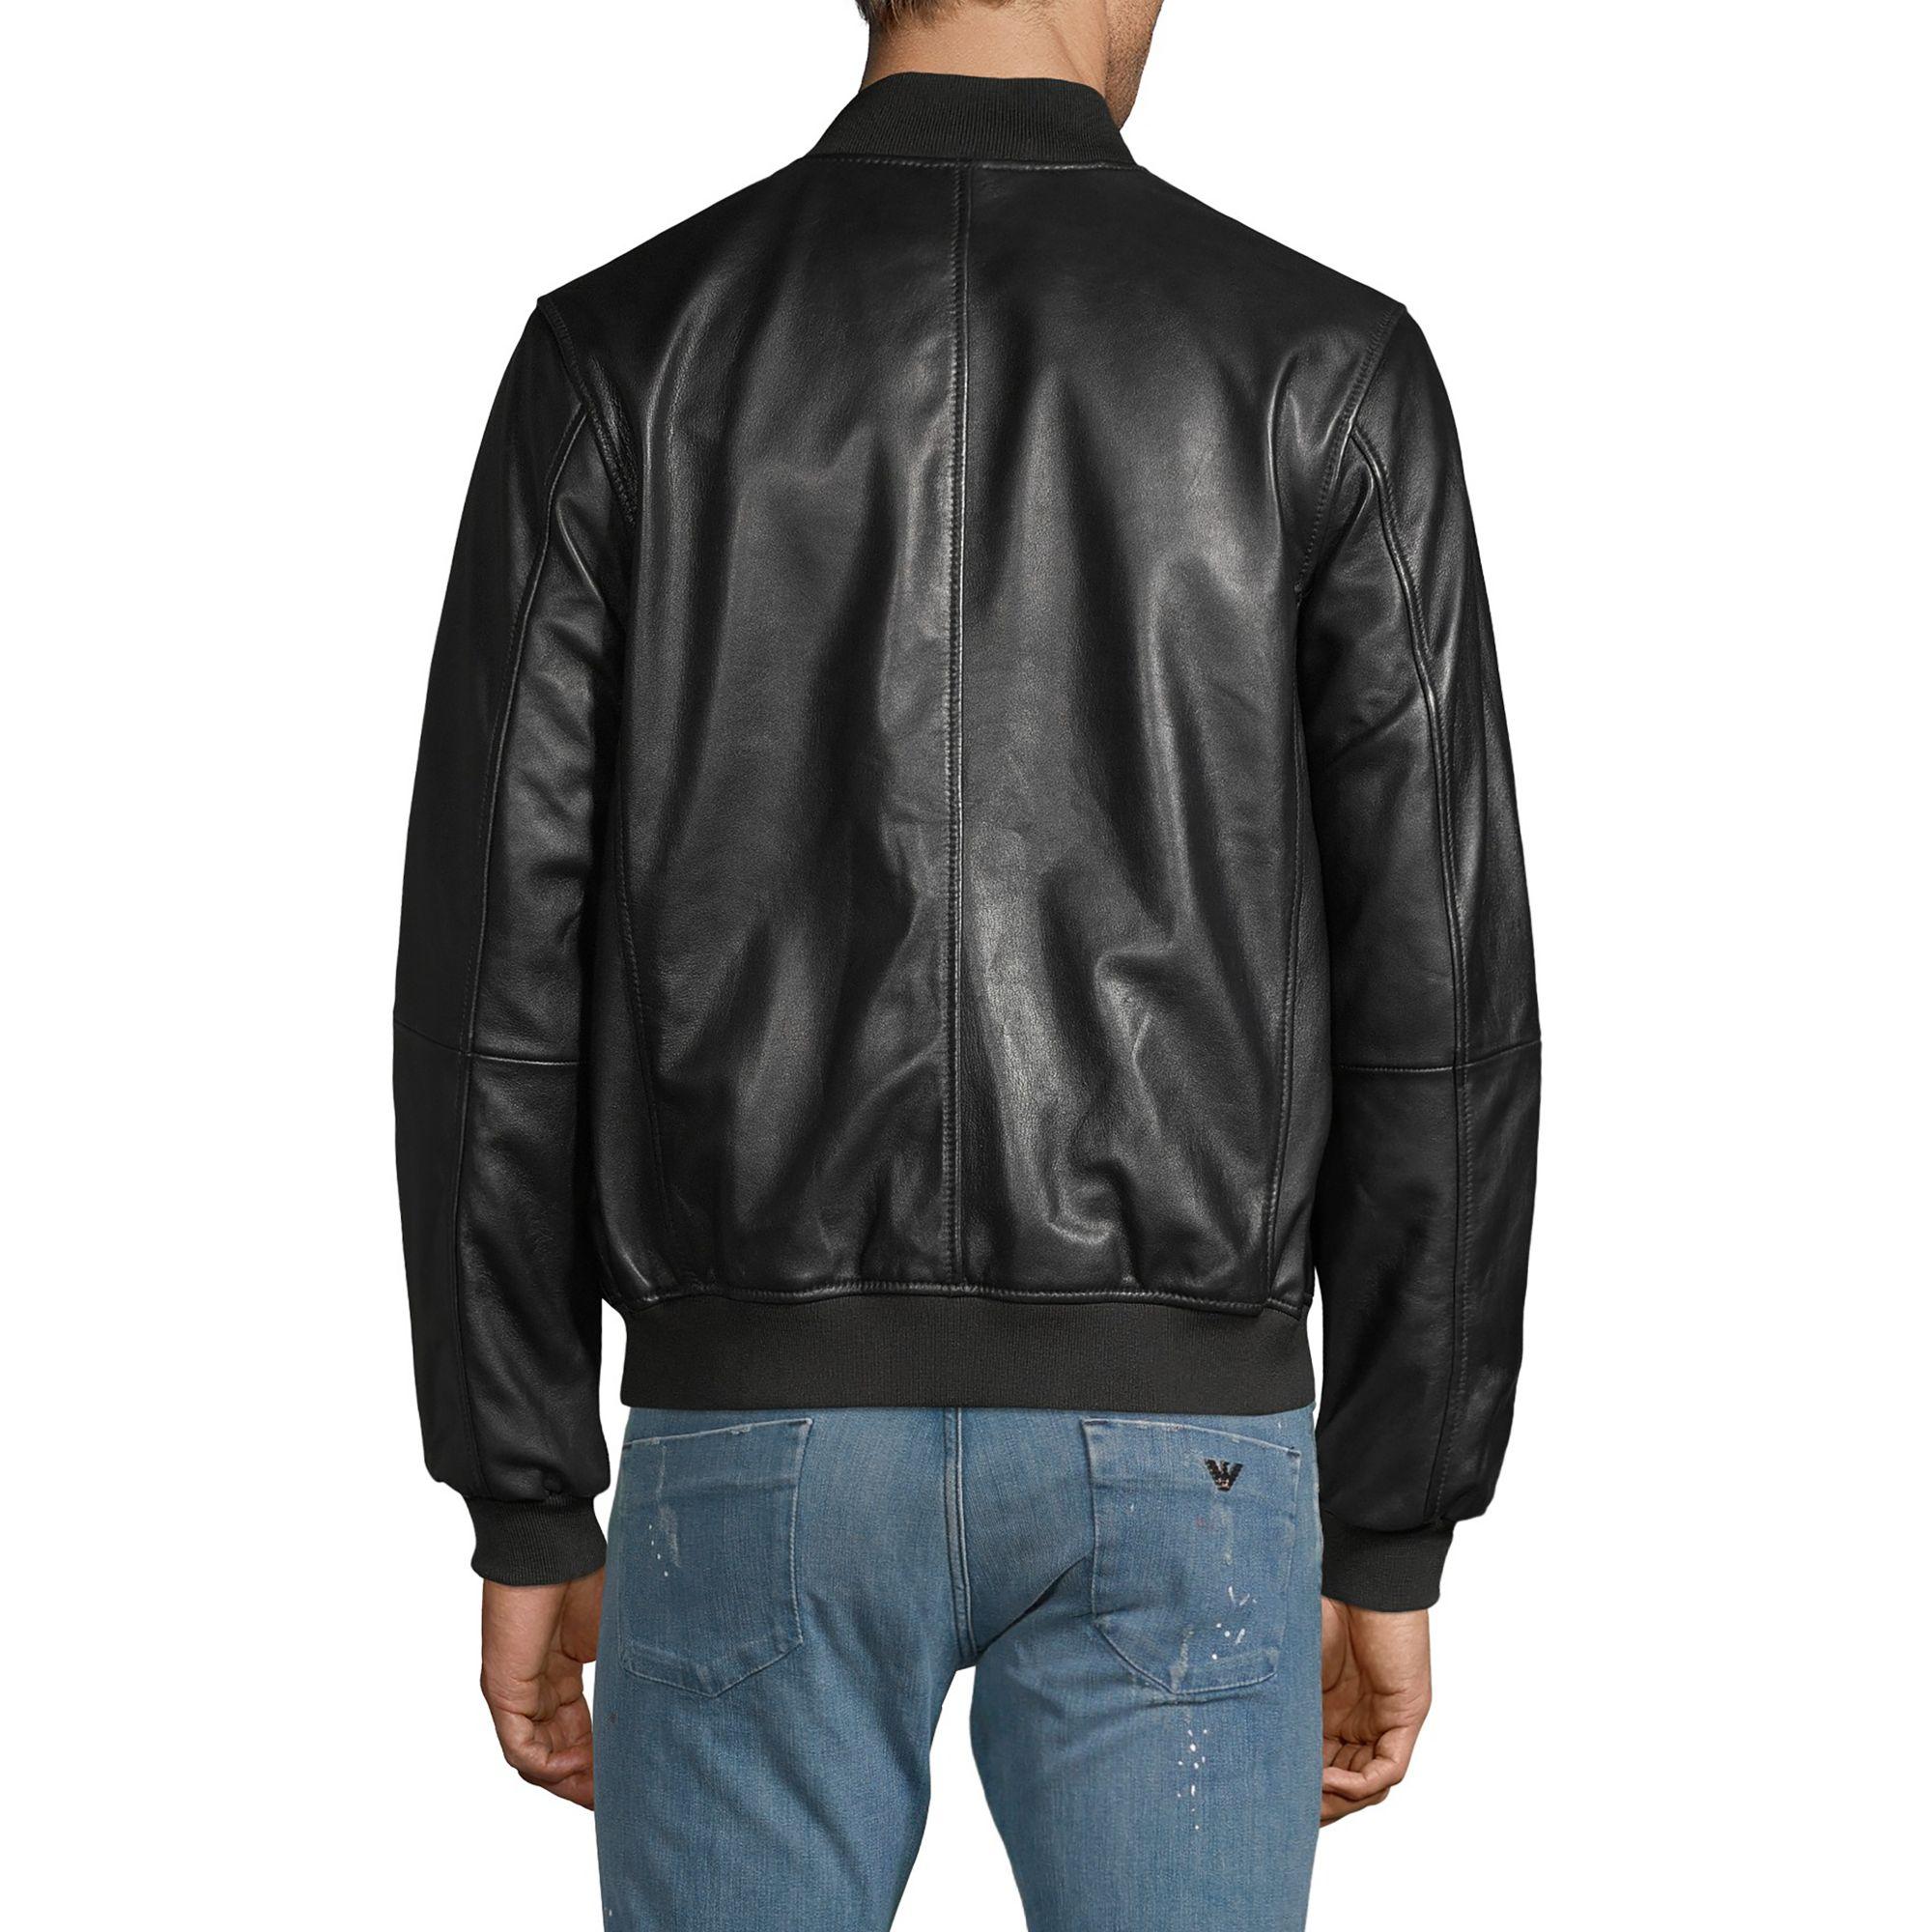 Saks Fifth Avenue Full-zip Leather Bomber Jacket in Black for Men - Lyst